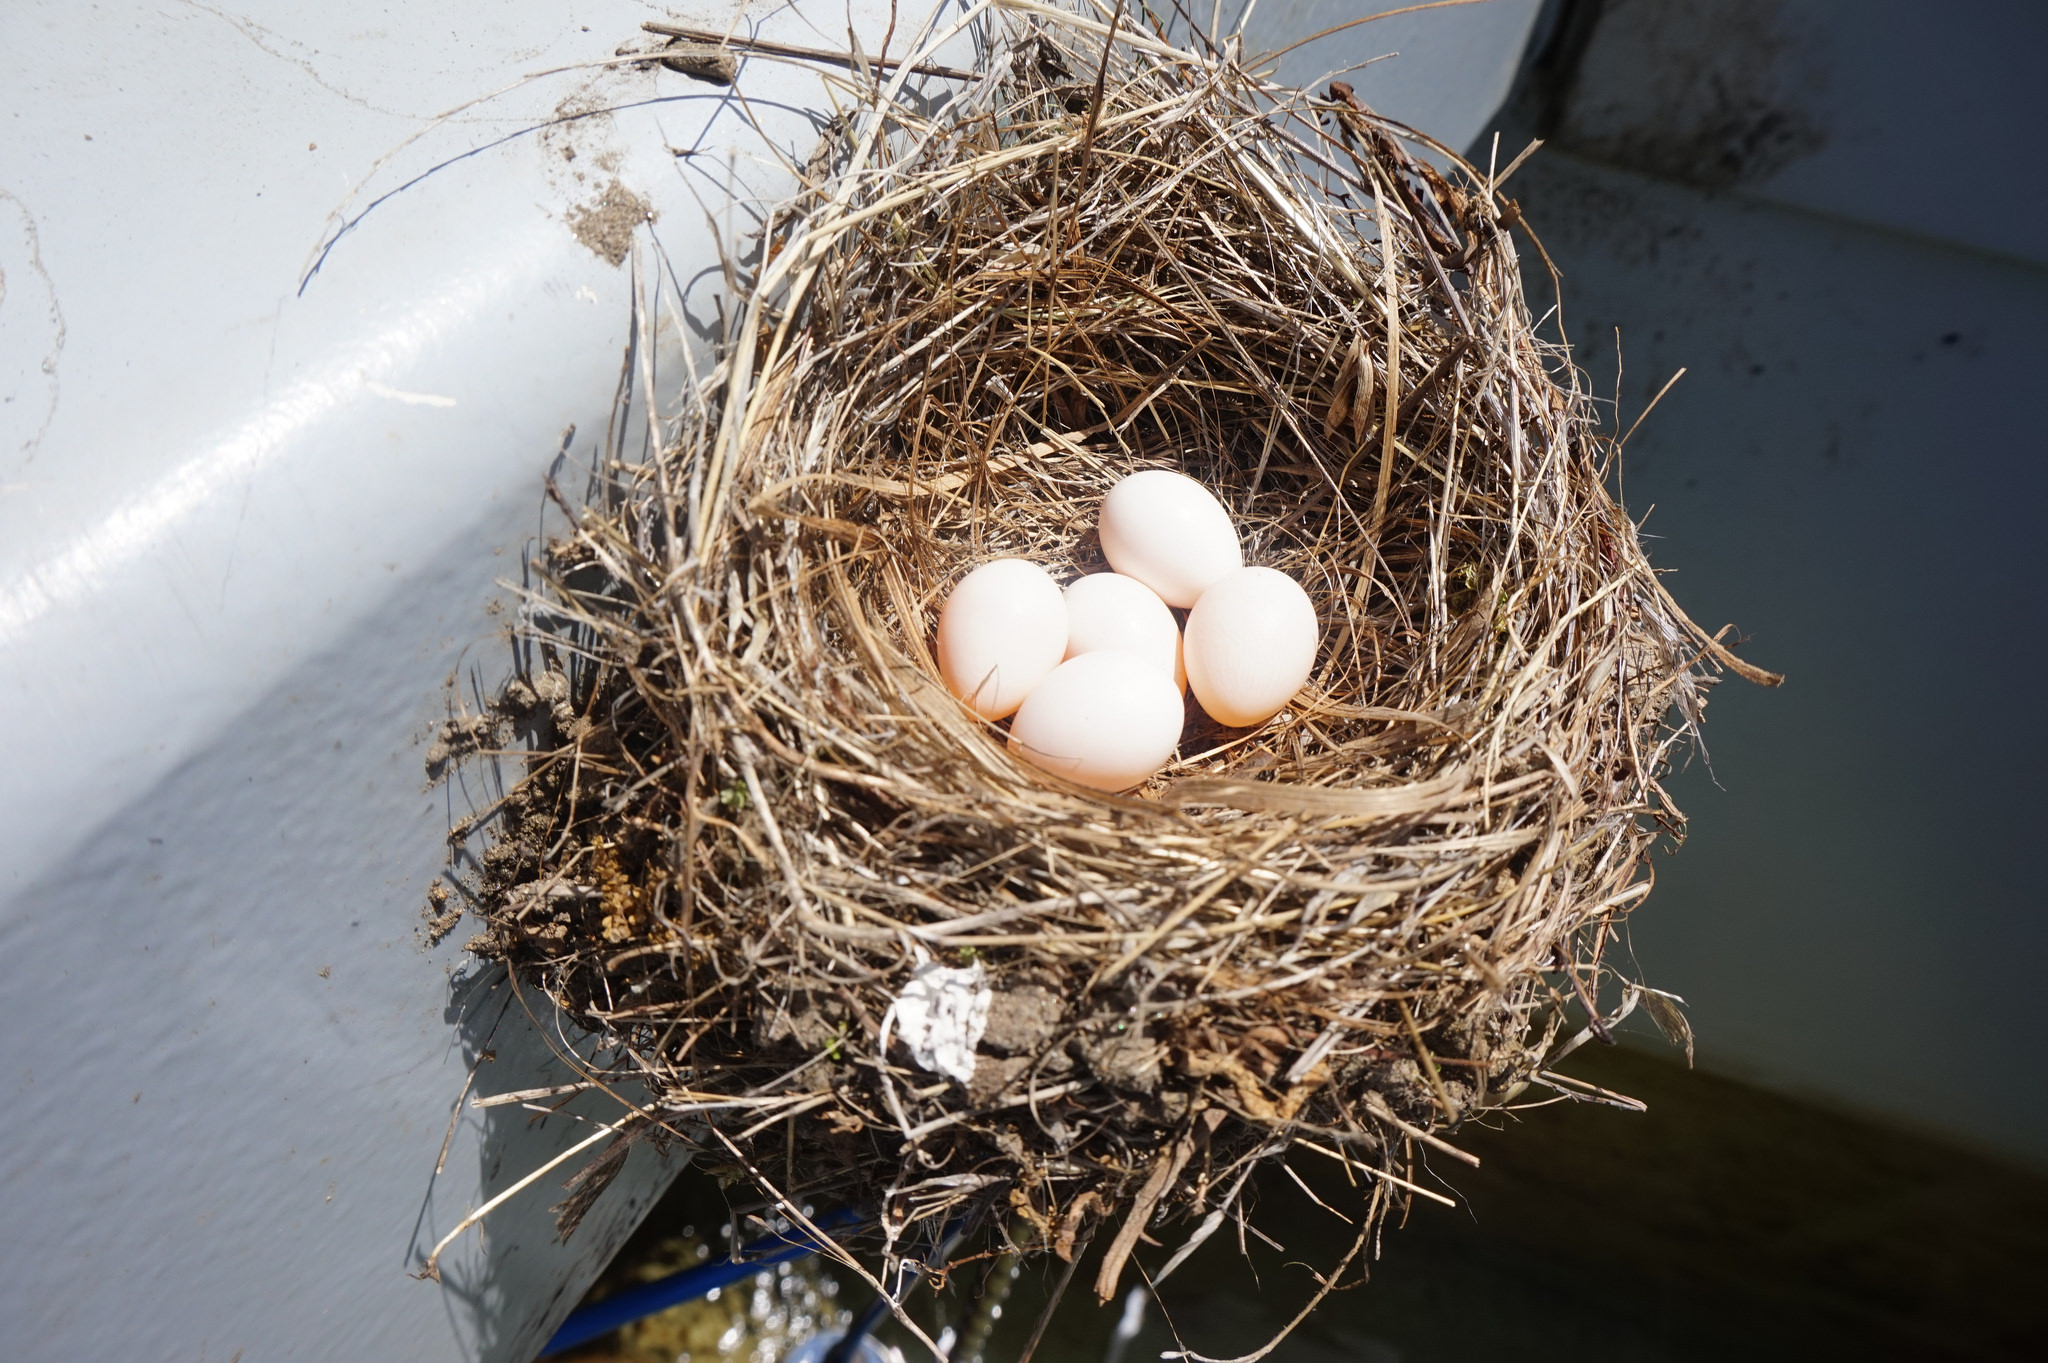 Black Phoebe Nest with eggs